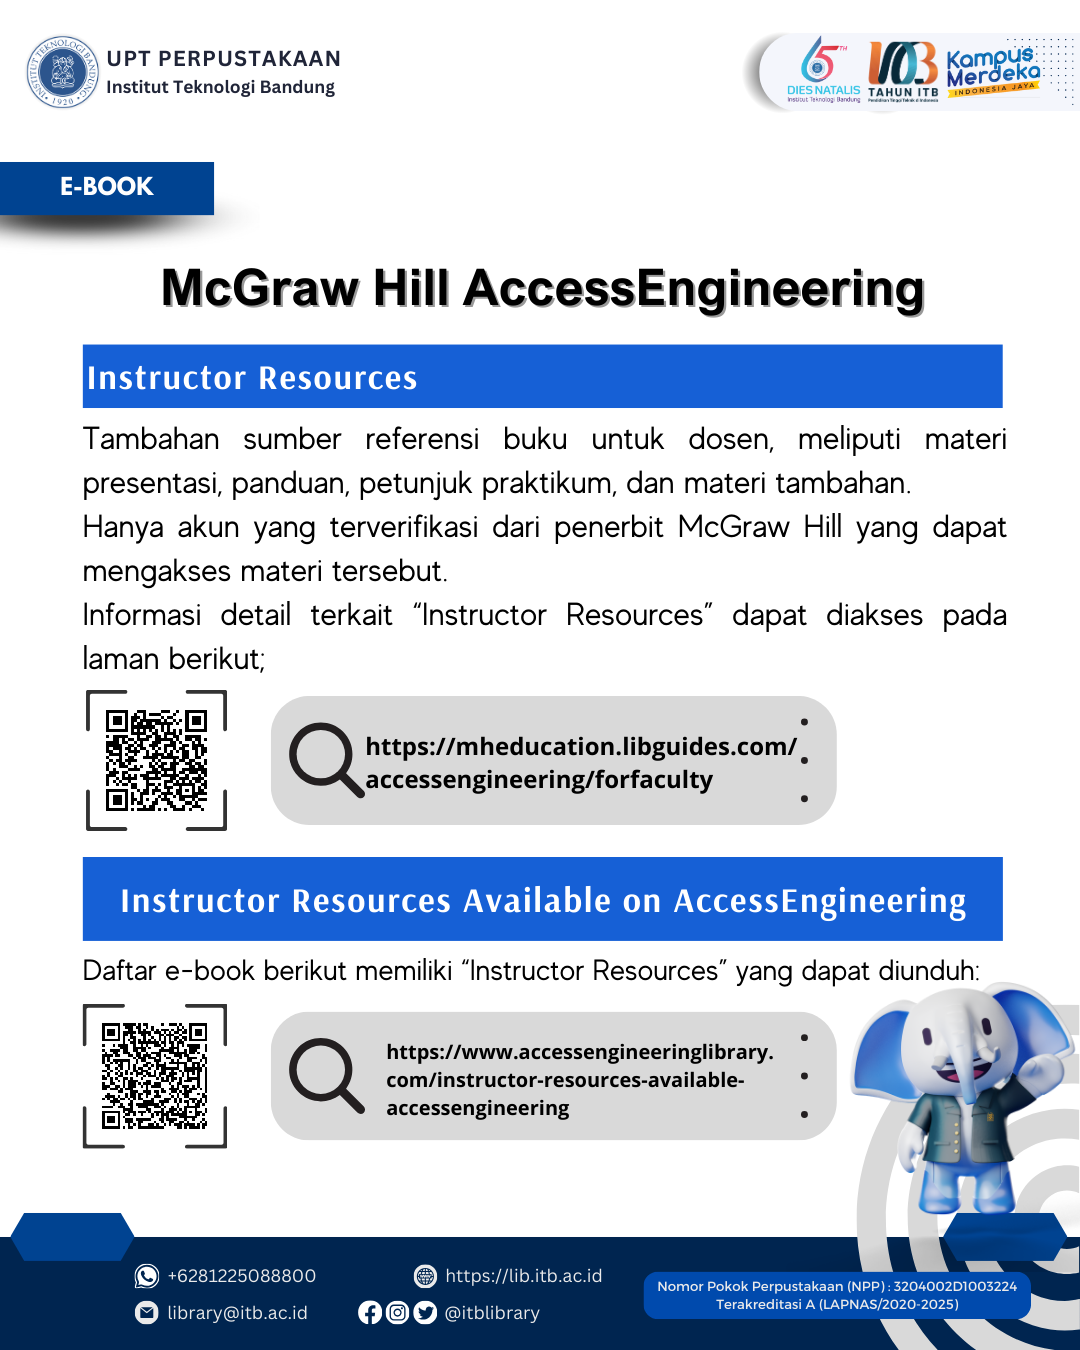 Instructor Resources pada McGraw Hill AccessEngineering